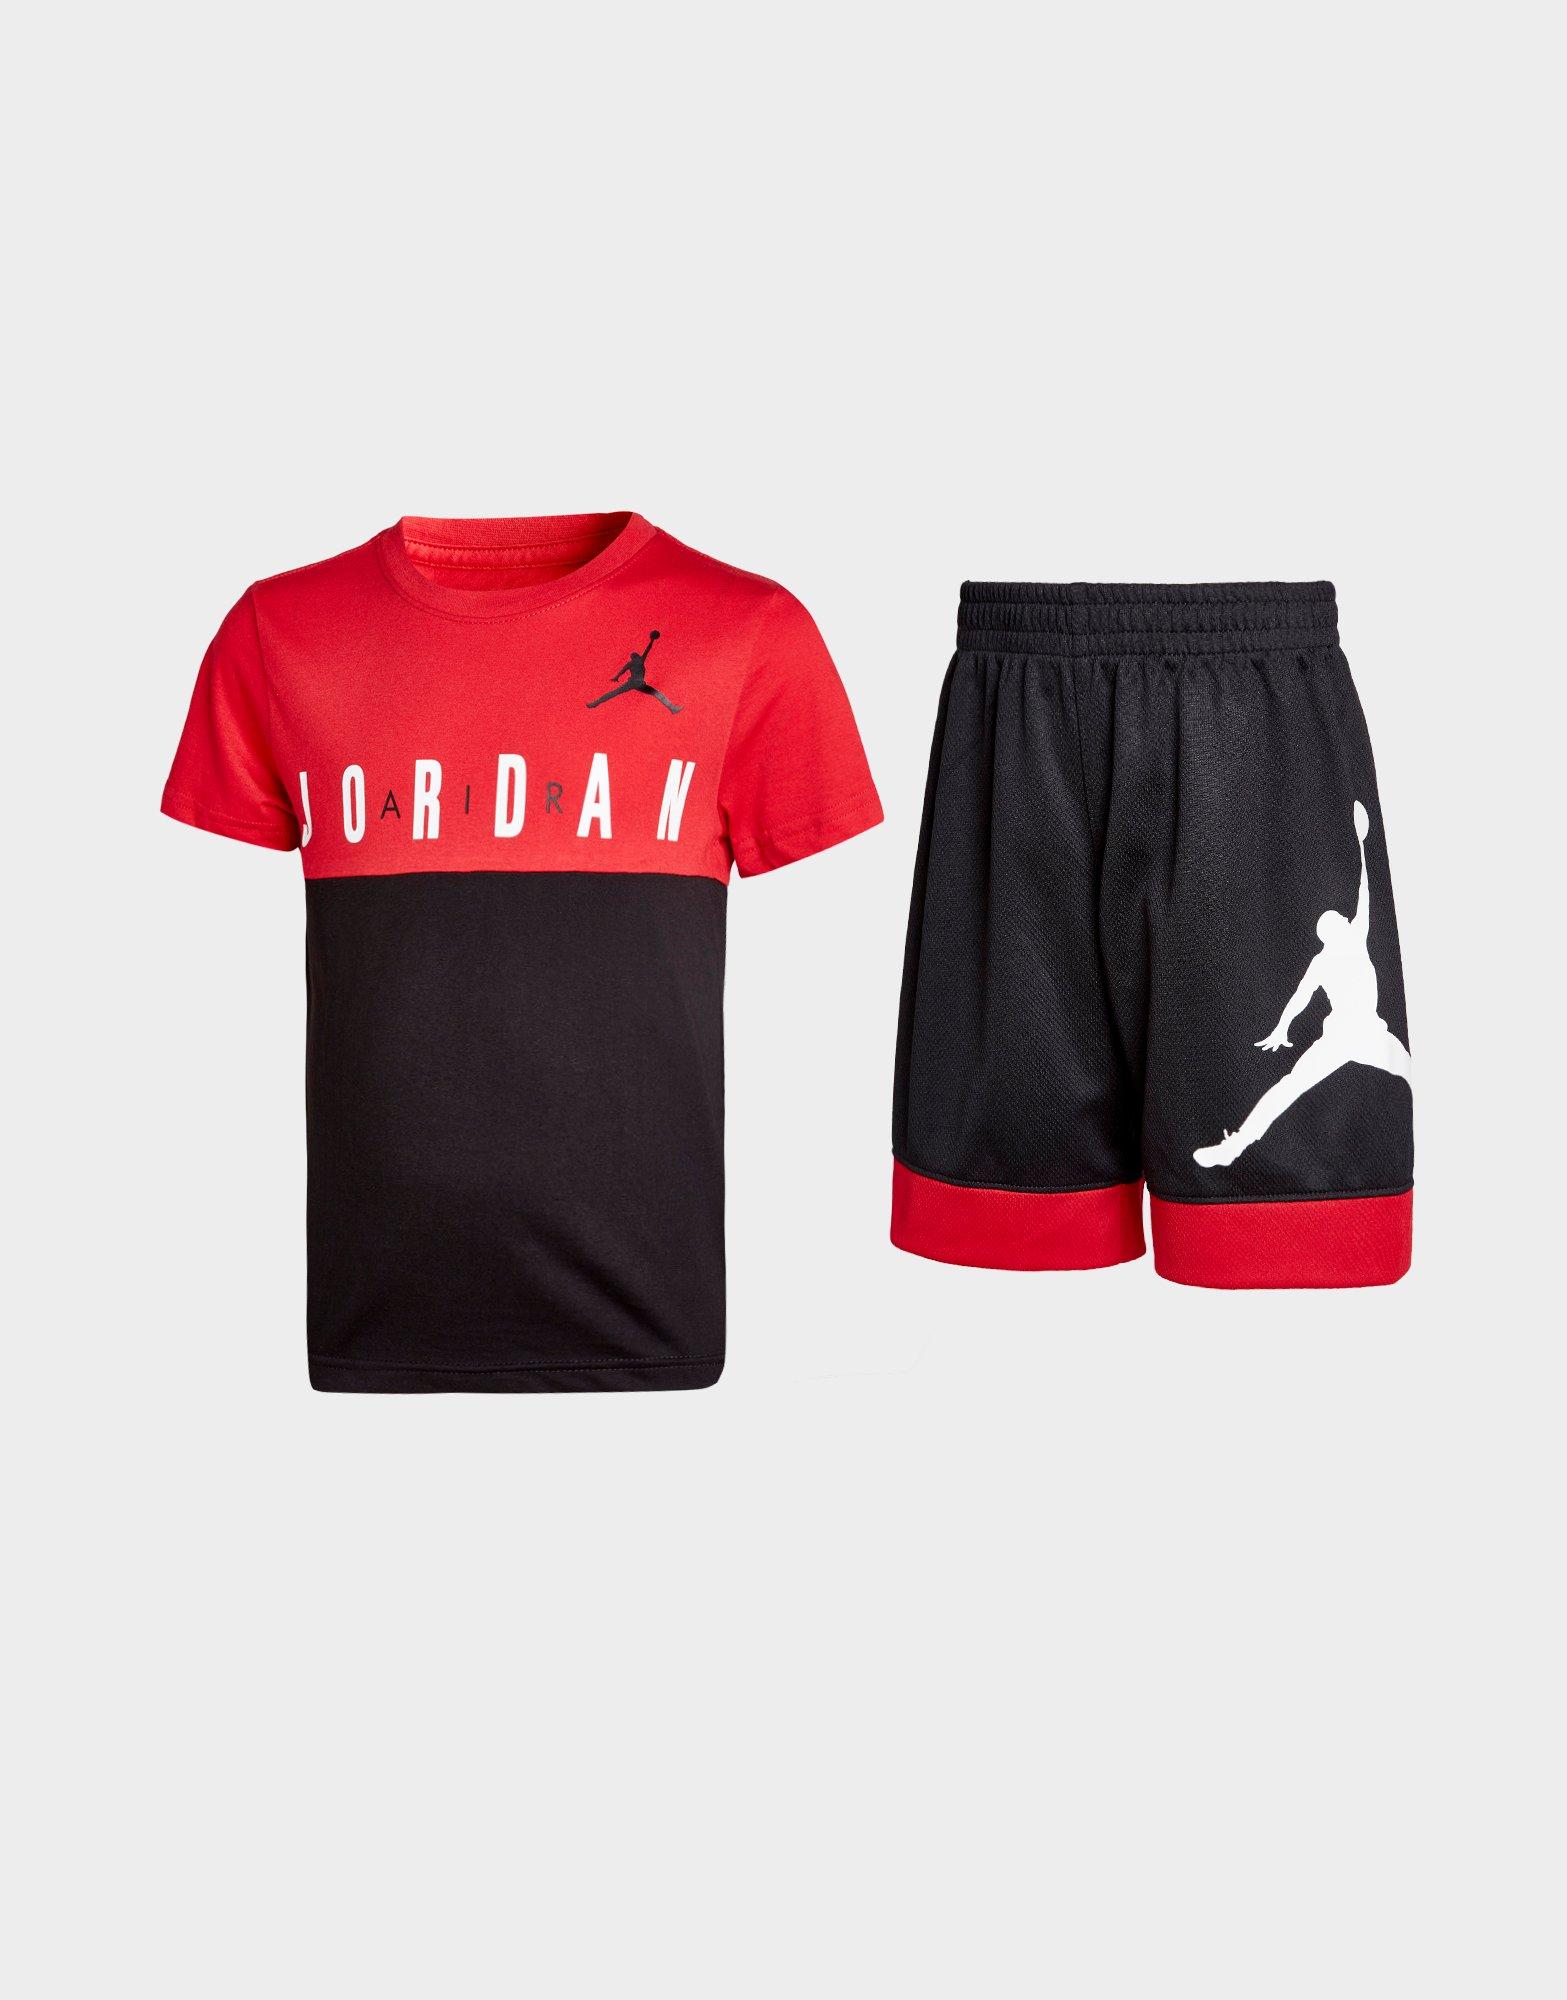 jordan t shirt and shorts set